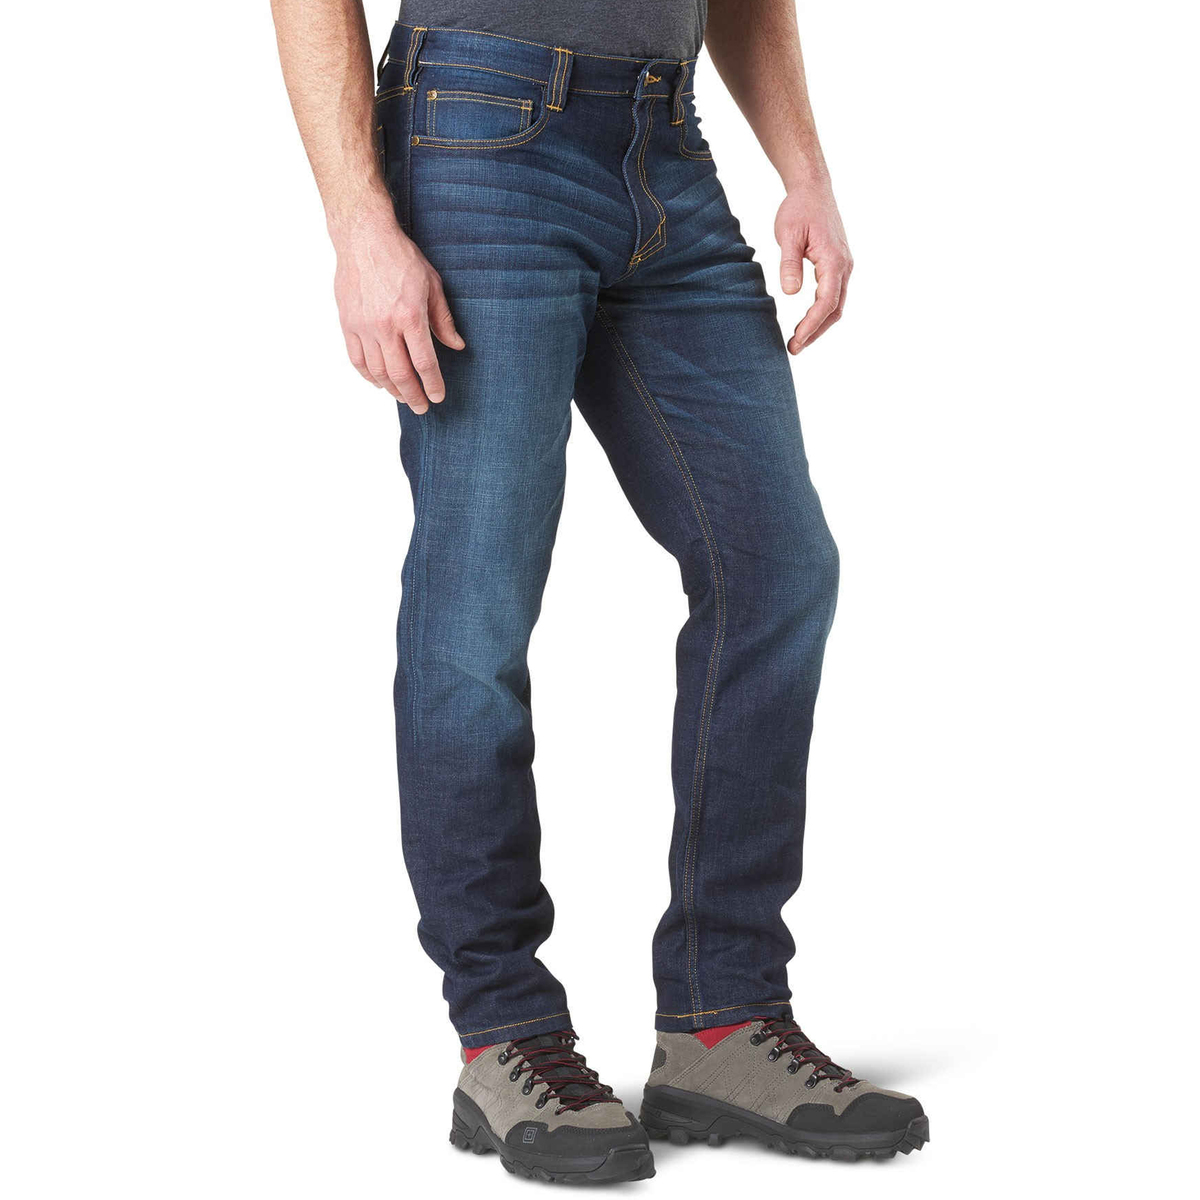 5.11 defender flex slim jeans review